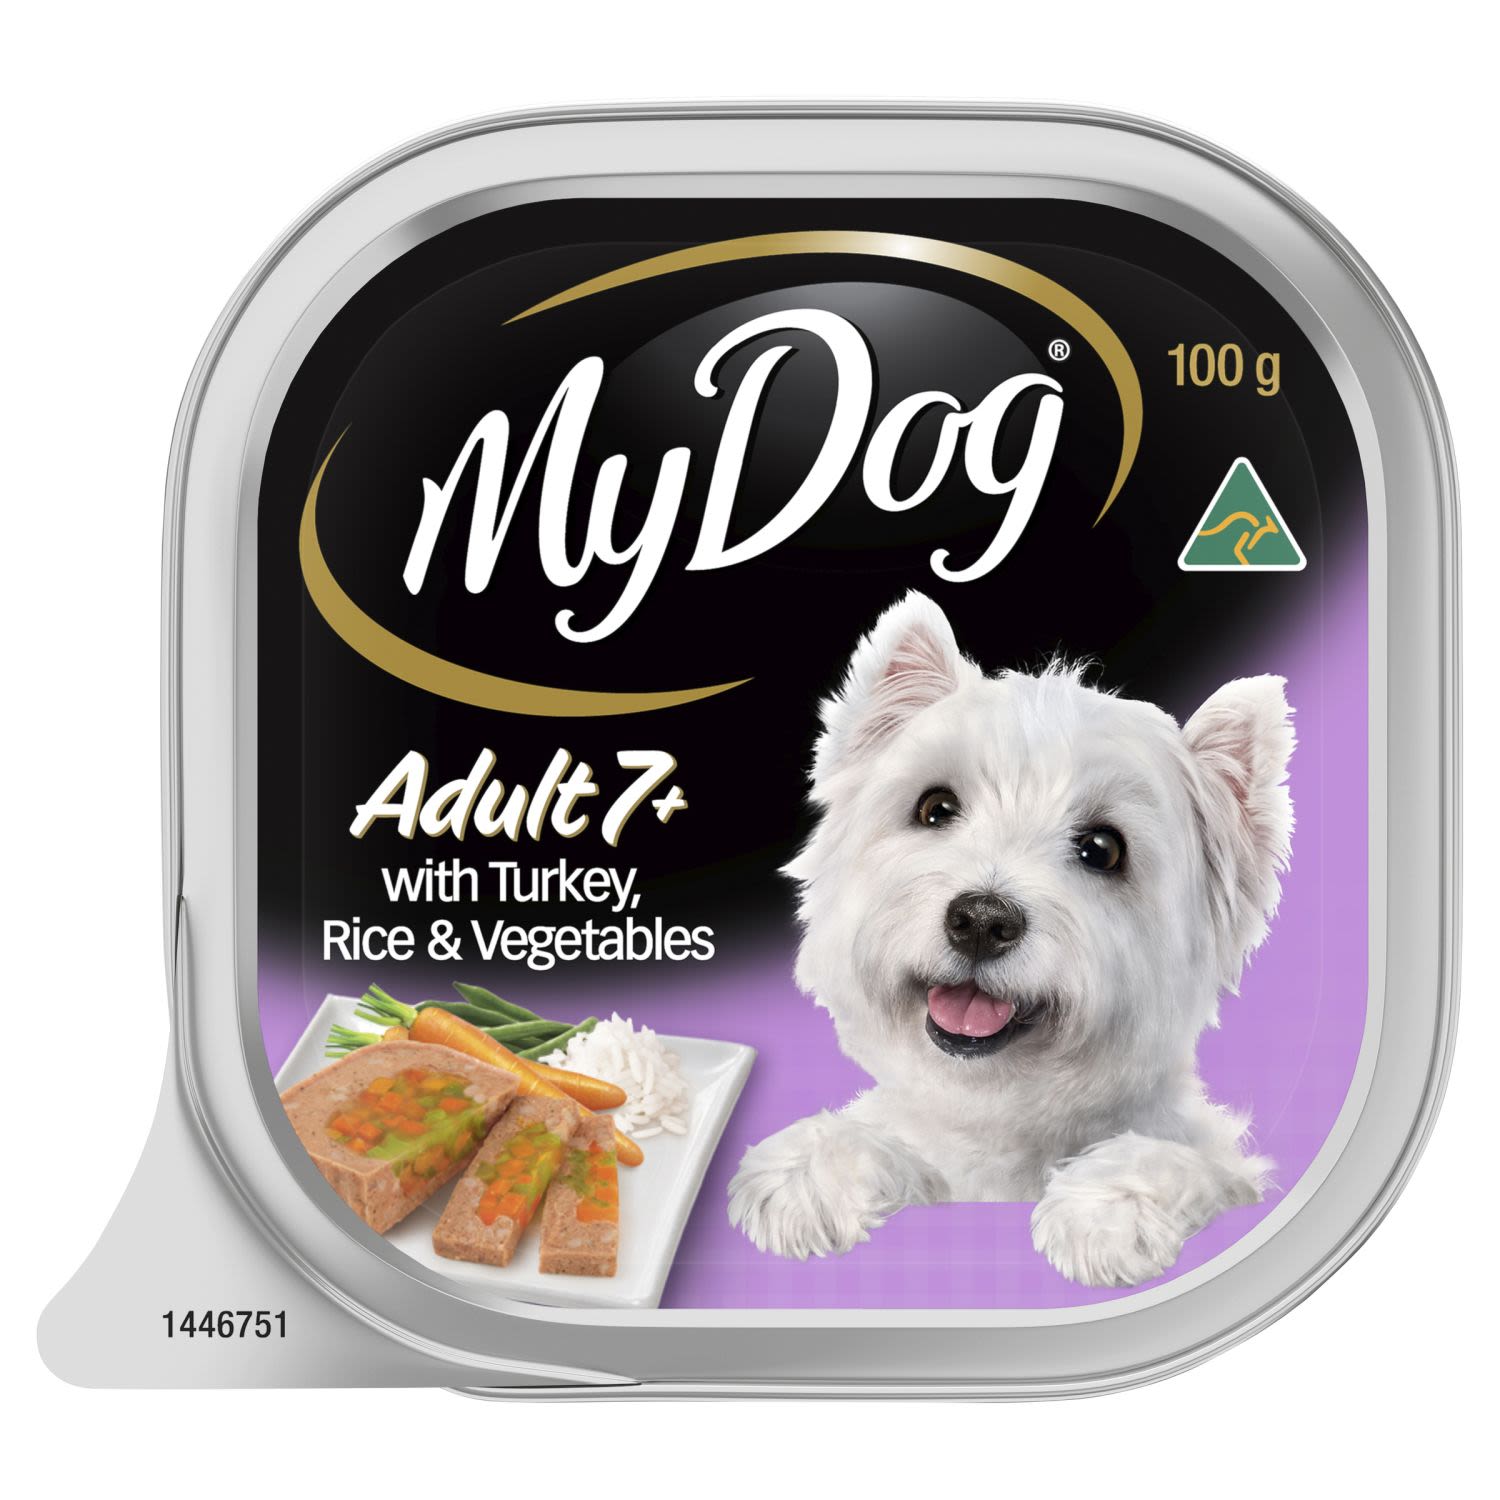 My Dog Adult 7+ Wet Dog Food Turkey & Rice with Vegetables, 100 Gram